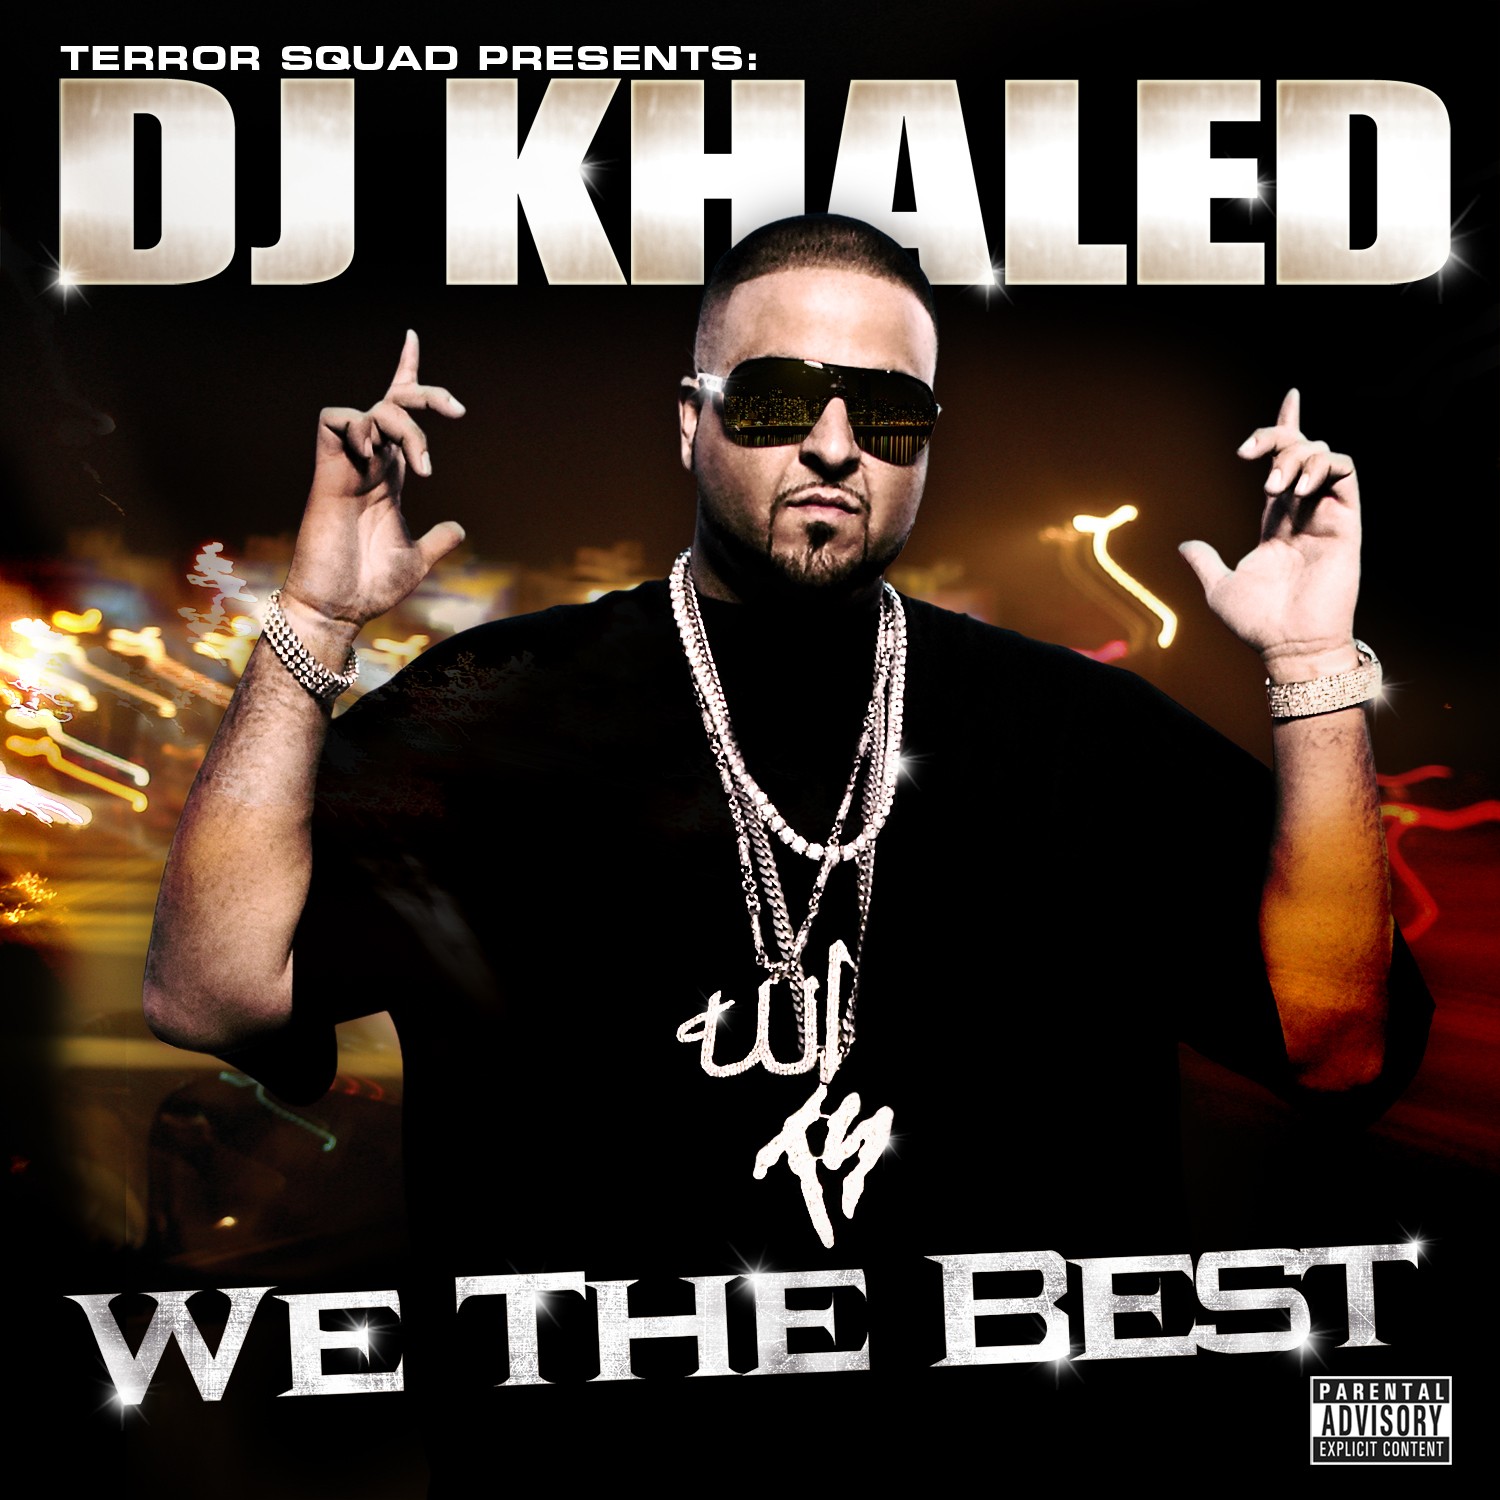 DJ Khaled - Discografia 2006 - 2012 (6 Albumes 320Kbps) (Estados Unidos) ~ Rap Under ...